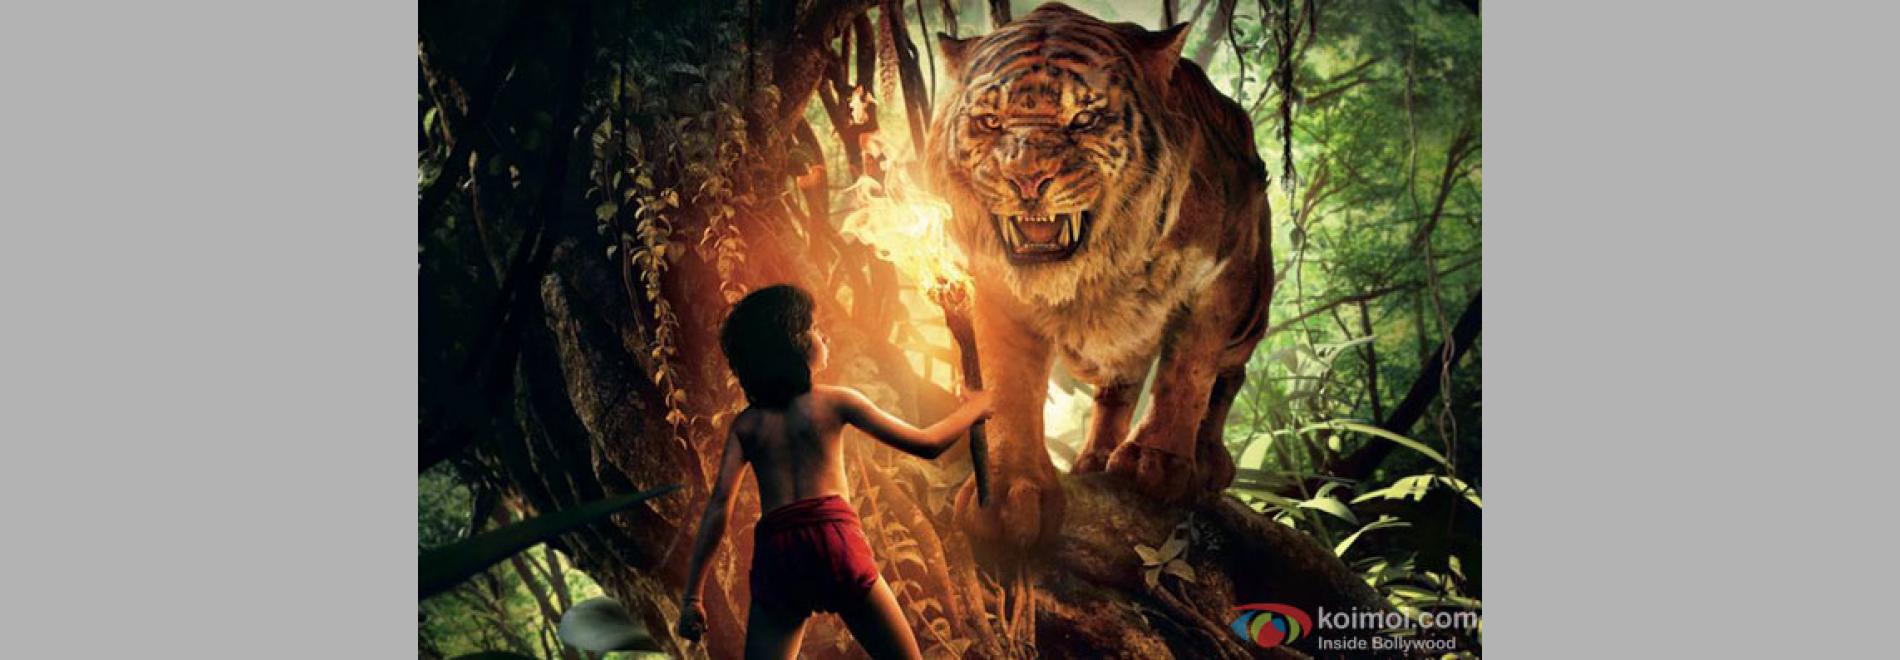 The Jungle Book (Jon Favreau, 2016)